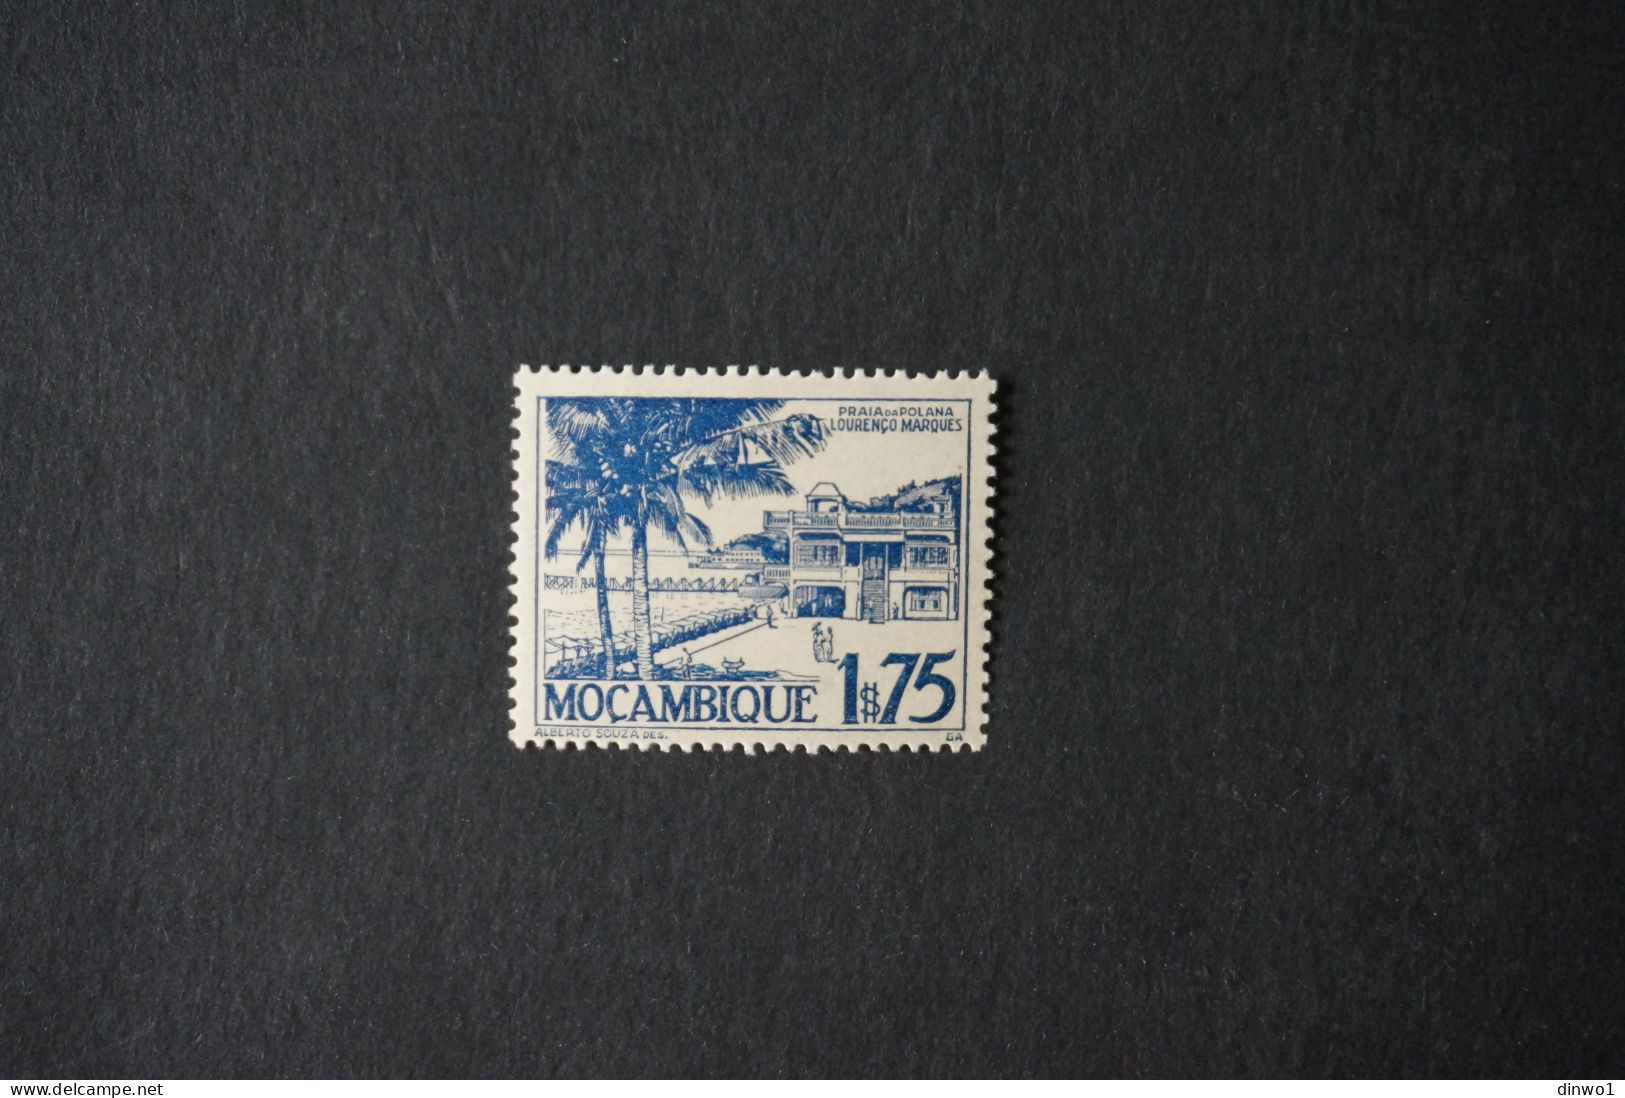 (T3) Mozambique - 1948 Local Views 1$75 - MNH - Mozambique